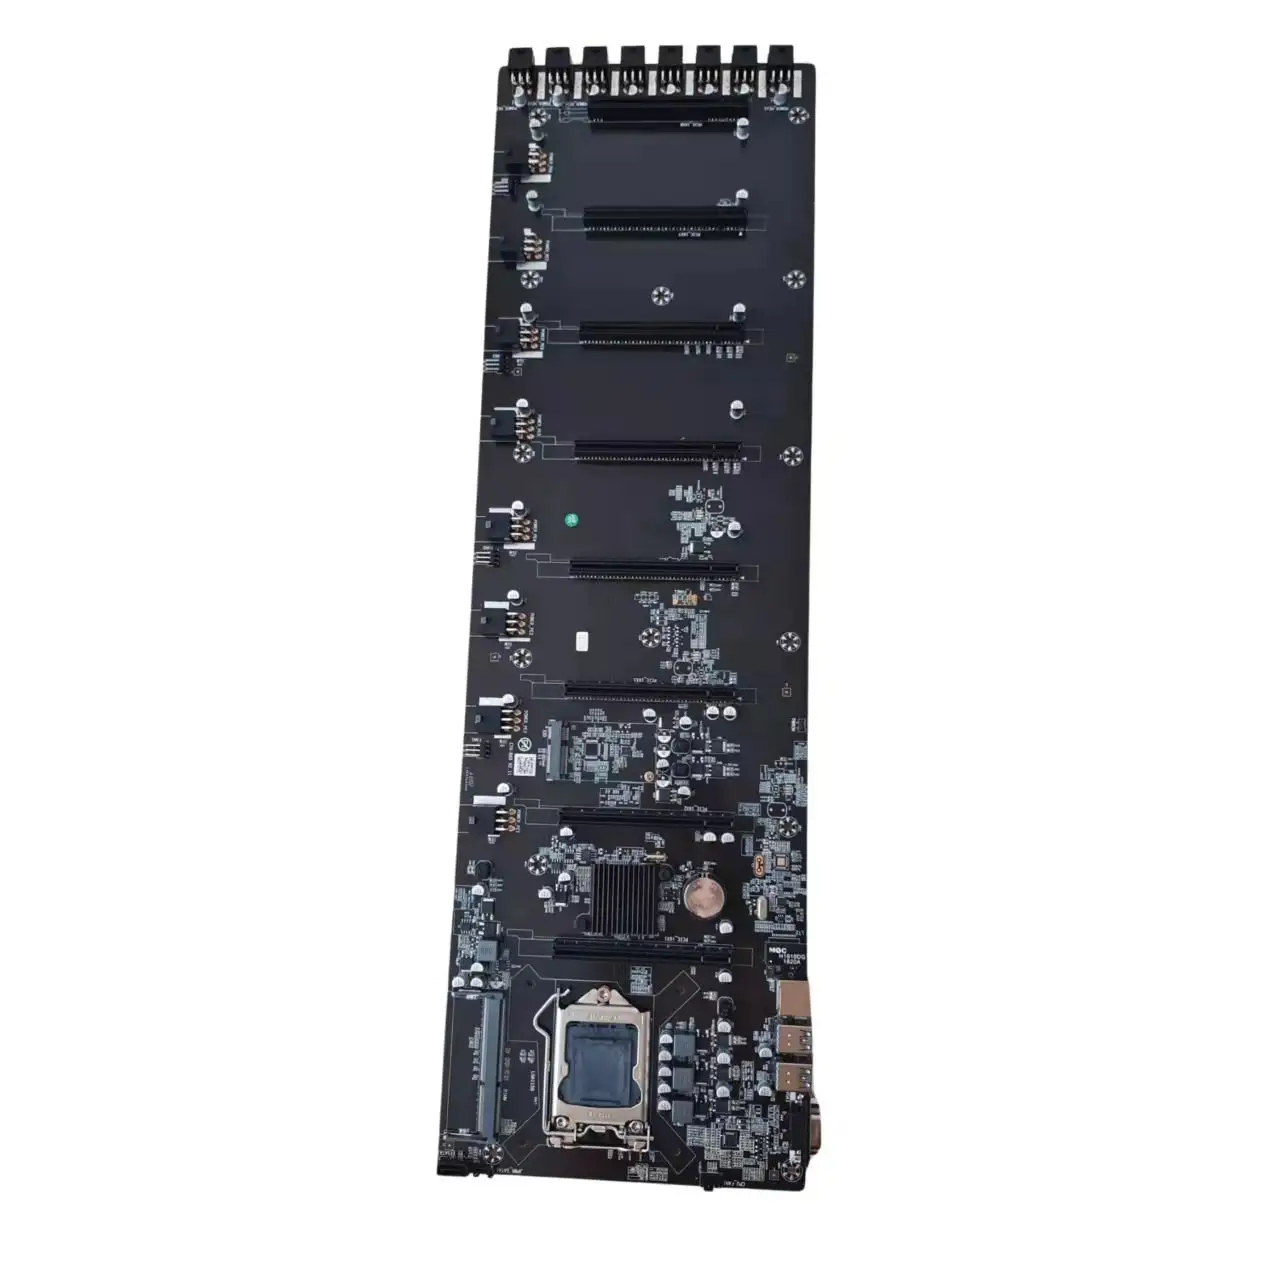 Motherboard B85 graphic card 8 GPU PCI-E 16X LGA1150 16GB DDR3 for desktop computer motherboard